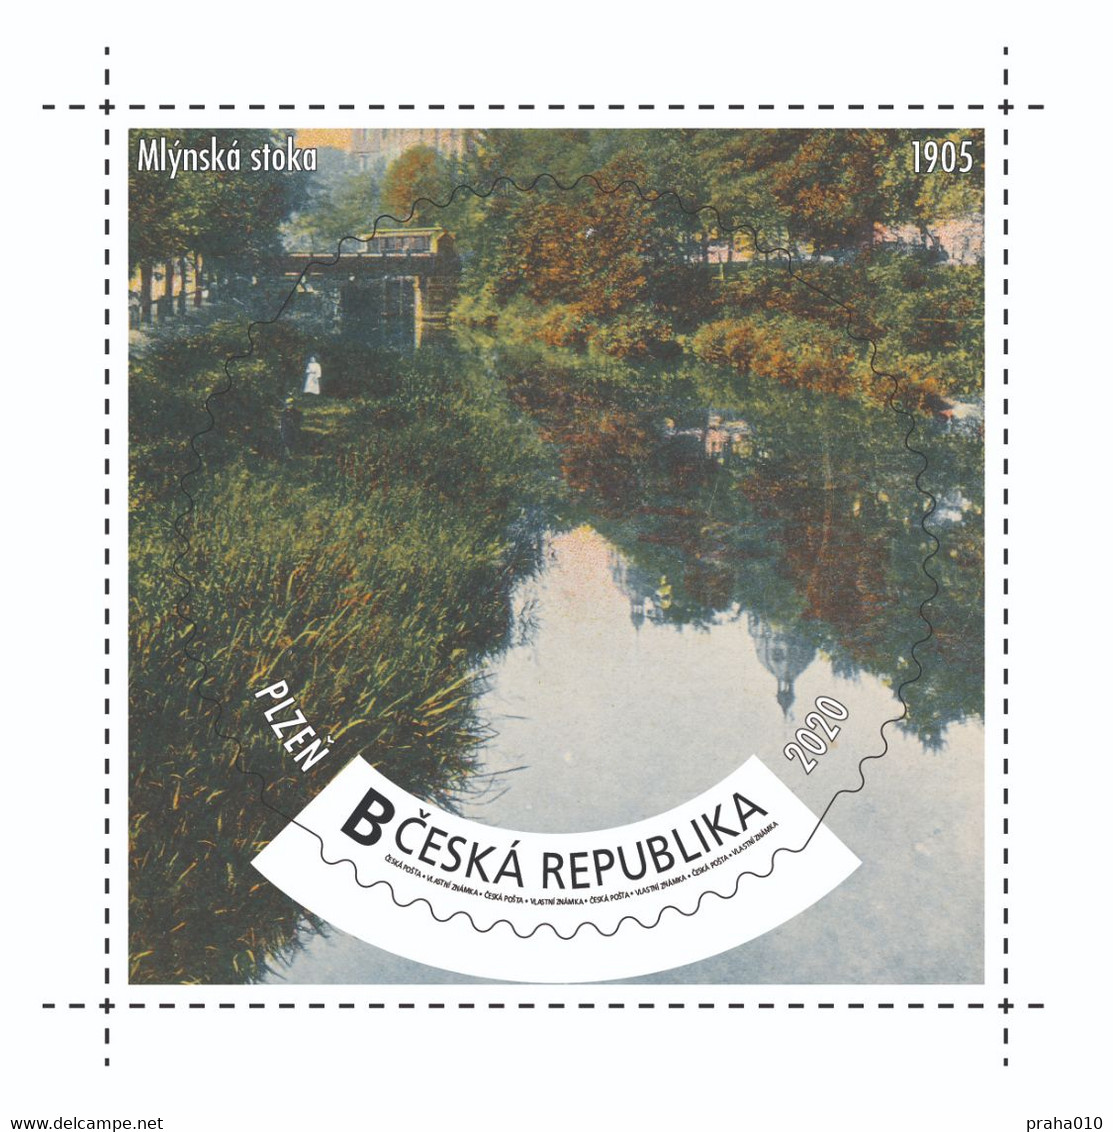 Czech Rep. / My Own Stamps (2020) 1007: City Plzen (1295-2020) - Pilsen (1905) Mill Drive, Park, Bridge - Ongebruikt